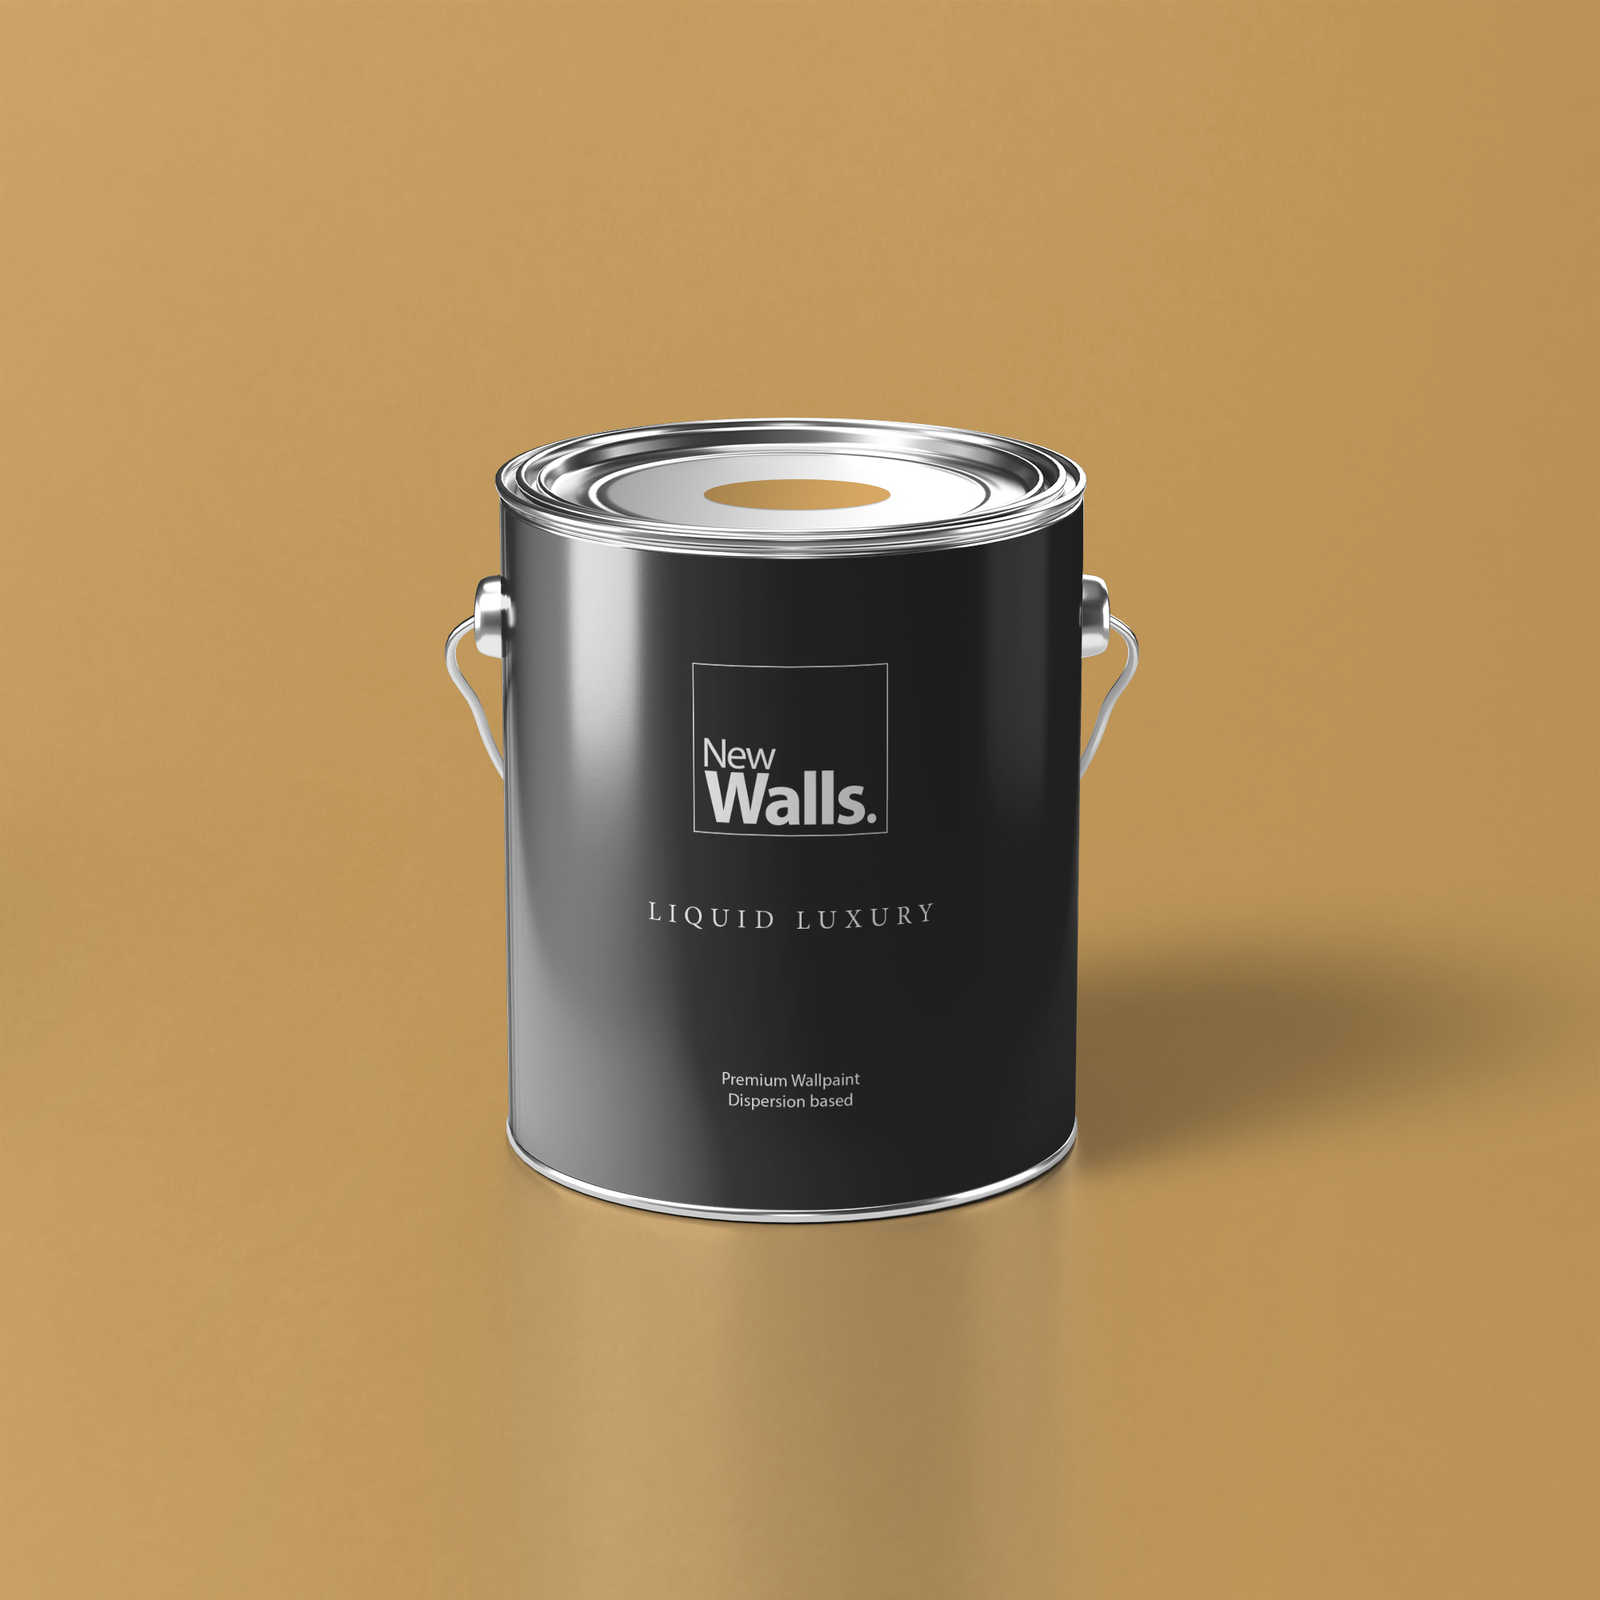 Premium Wall Paint refreshing mustard yellow »Beige Orange/Sassy Saffron« NW812 – 5 litre
